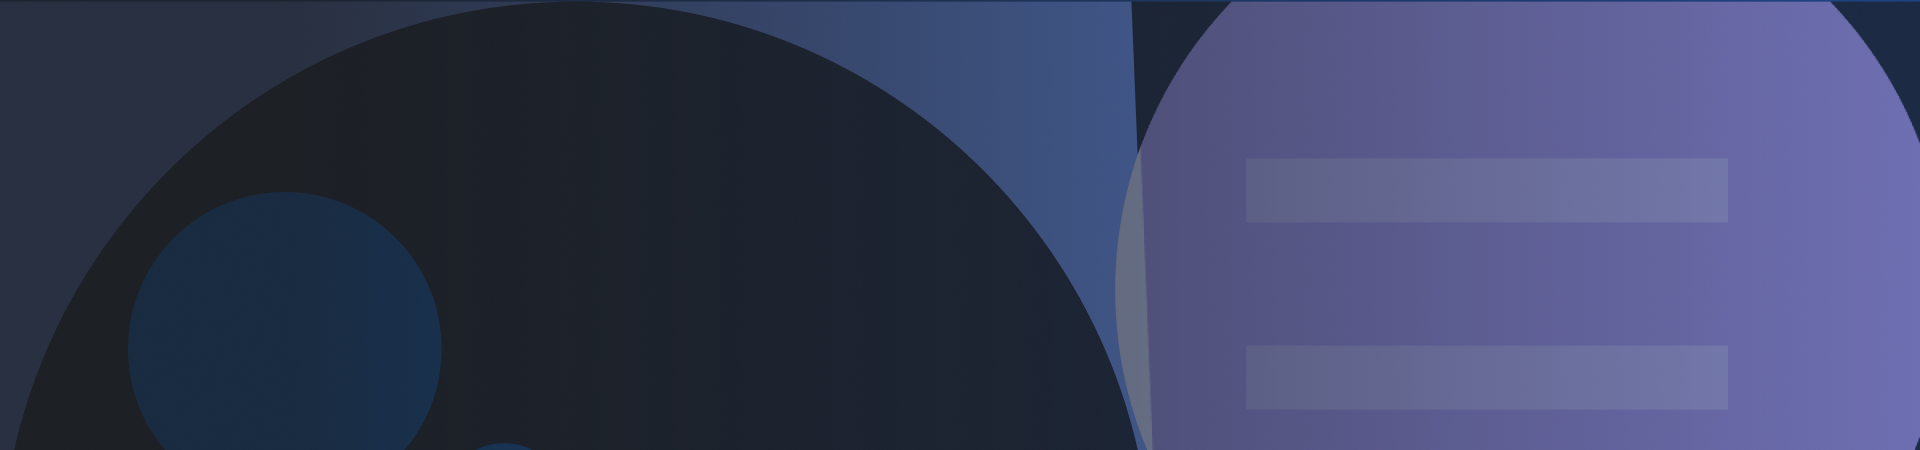 Dark blue and violet geometric shapes 